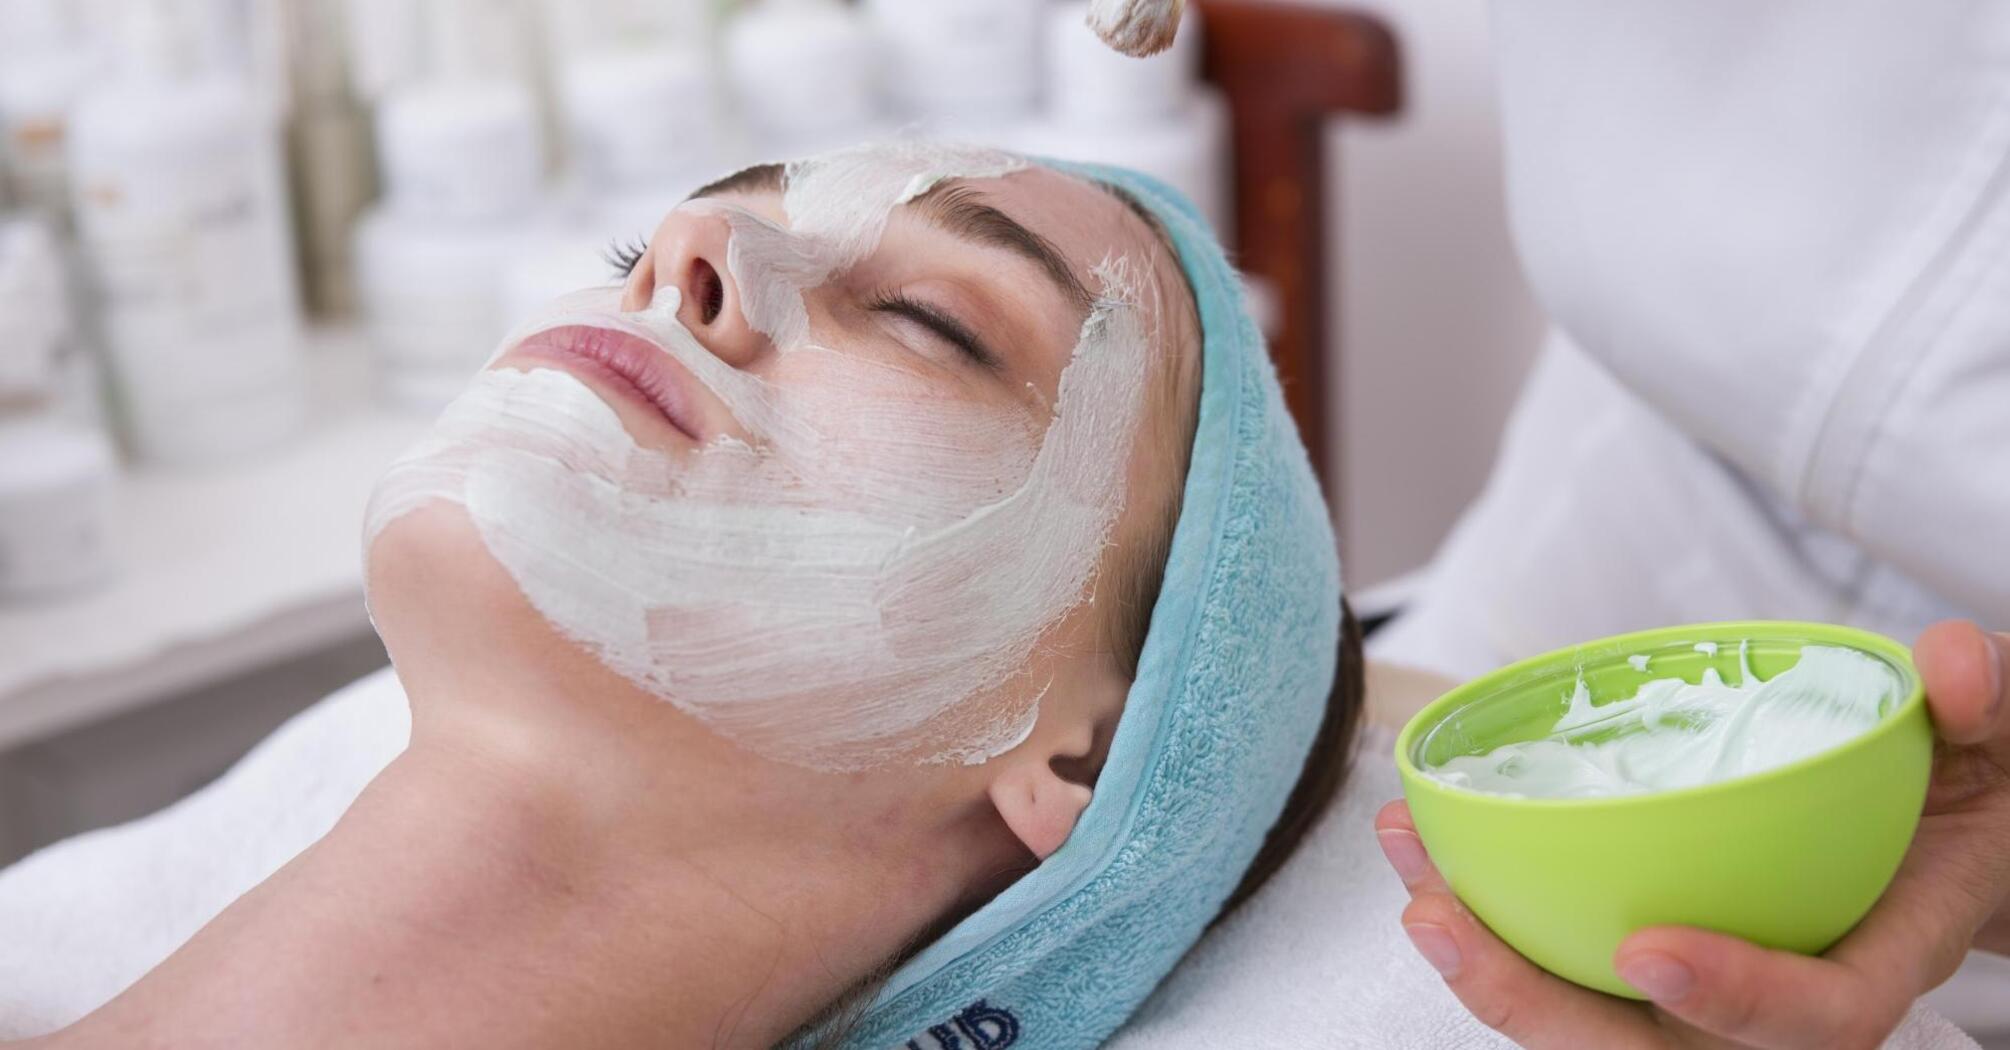 Woman undergoing beauty treatments in a spa salon